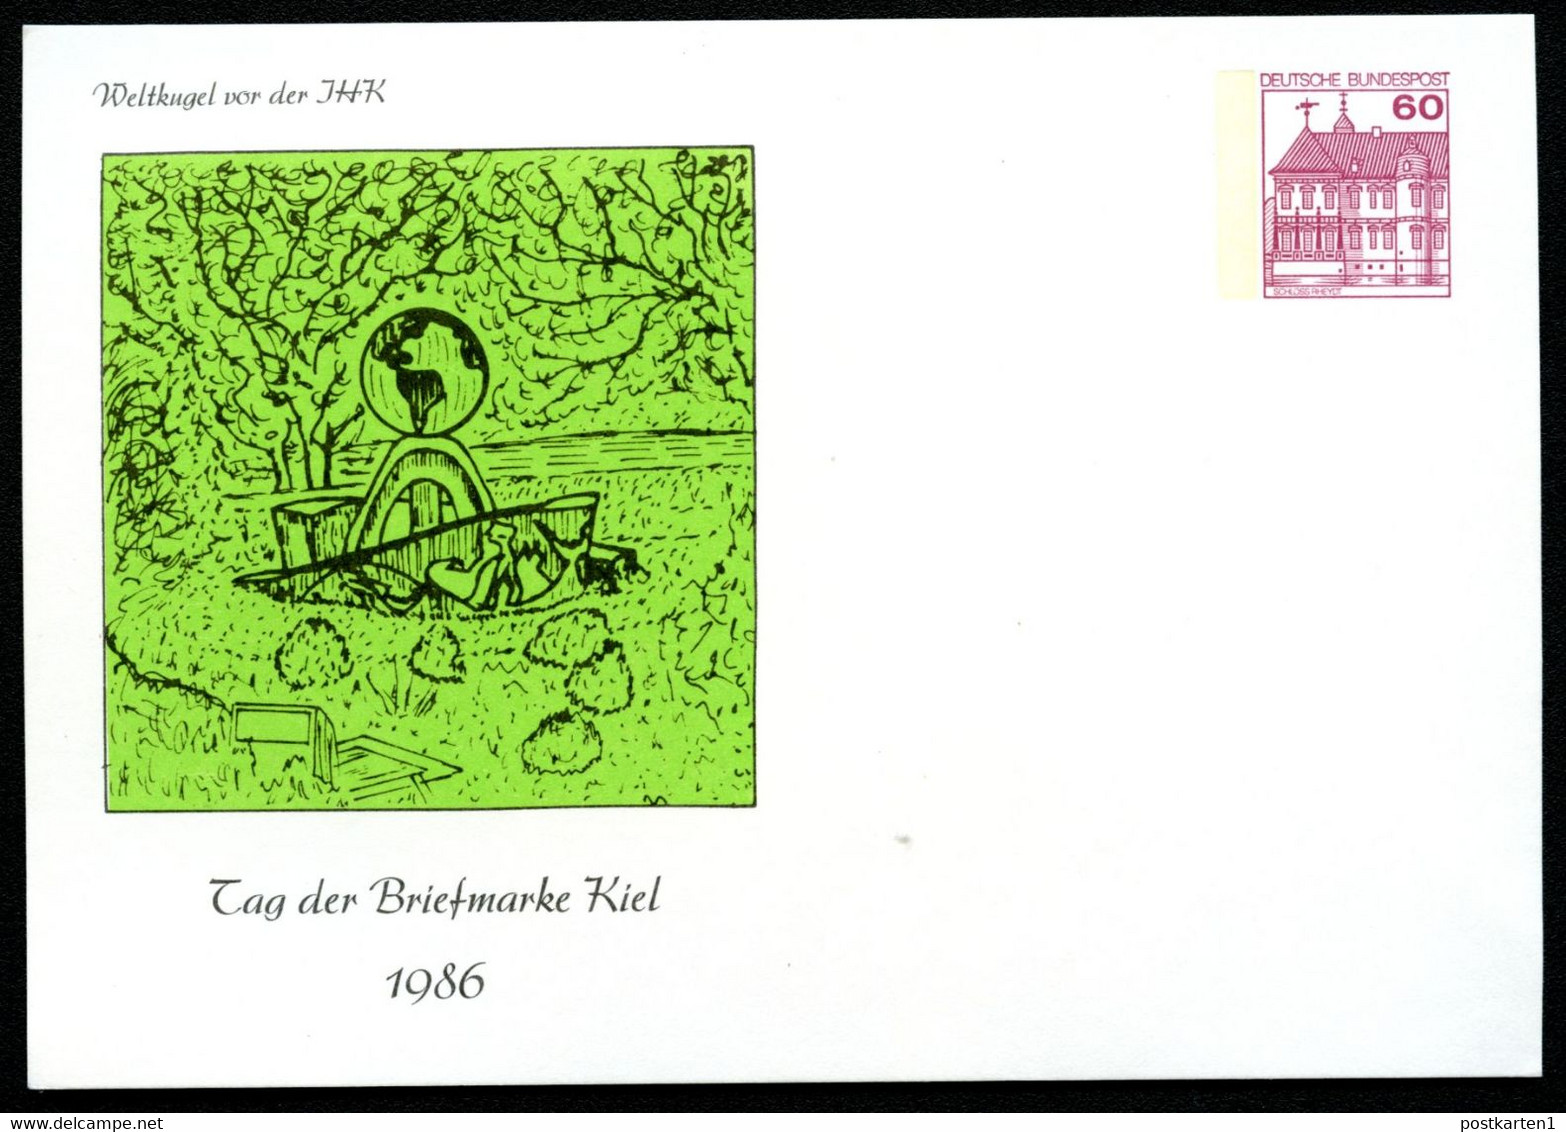 Bund PP106 C2/026-I SKULPTUR GLOBUS IHK 1958 V. U. Hensel-Krüger Kiel 1986 - Private Postcards - Mint